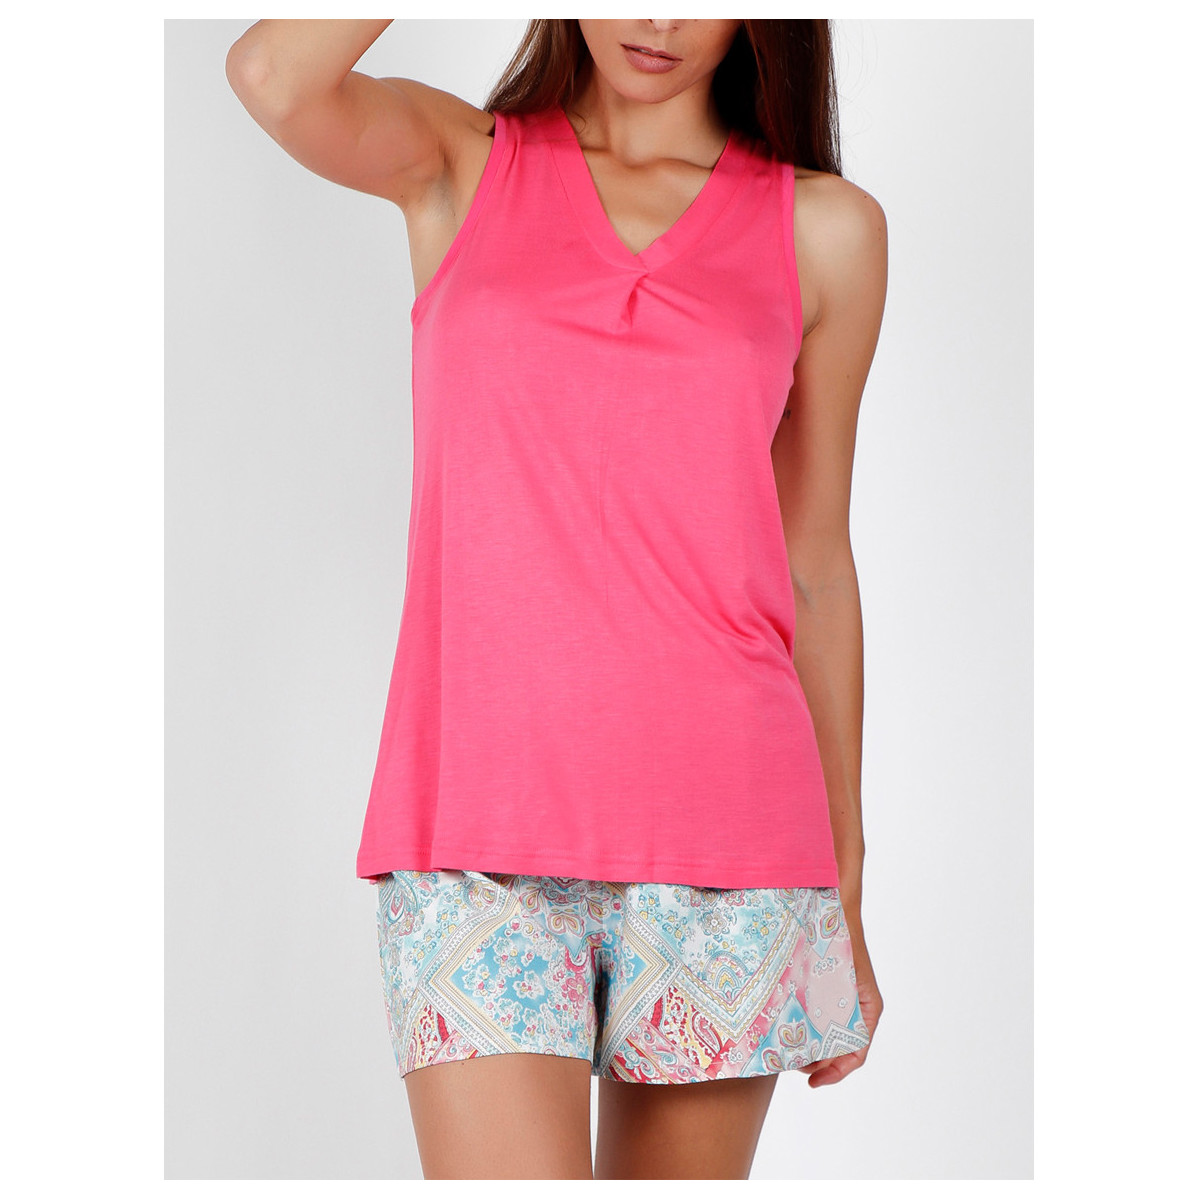 Kleidung Damen Pyjamas/ Nachthemden Admas Pyjama-Shorts Tanktop Colored Diamonds rosa Rosa